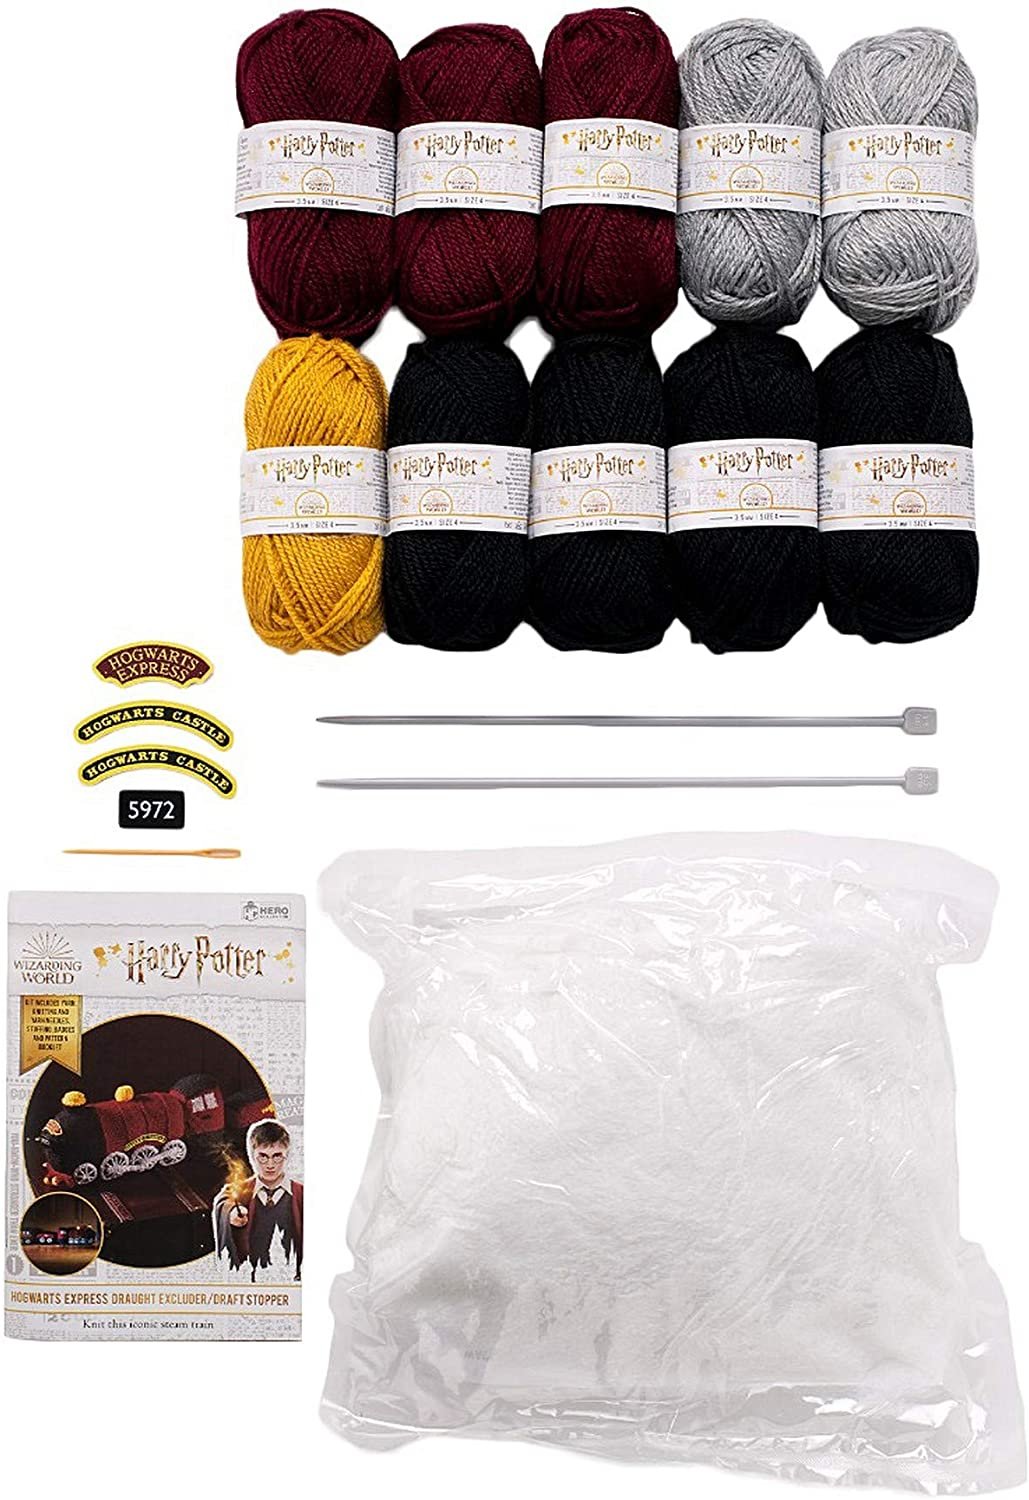 Harry Potter: Hogwarts Express Draught Excluder Knitting Kit